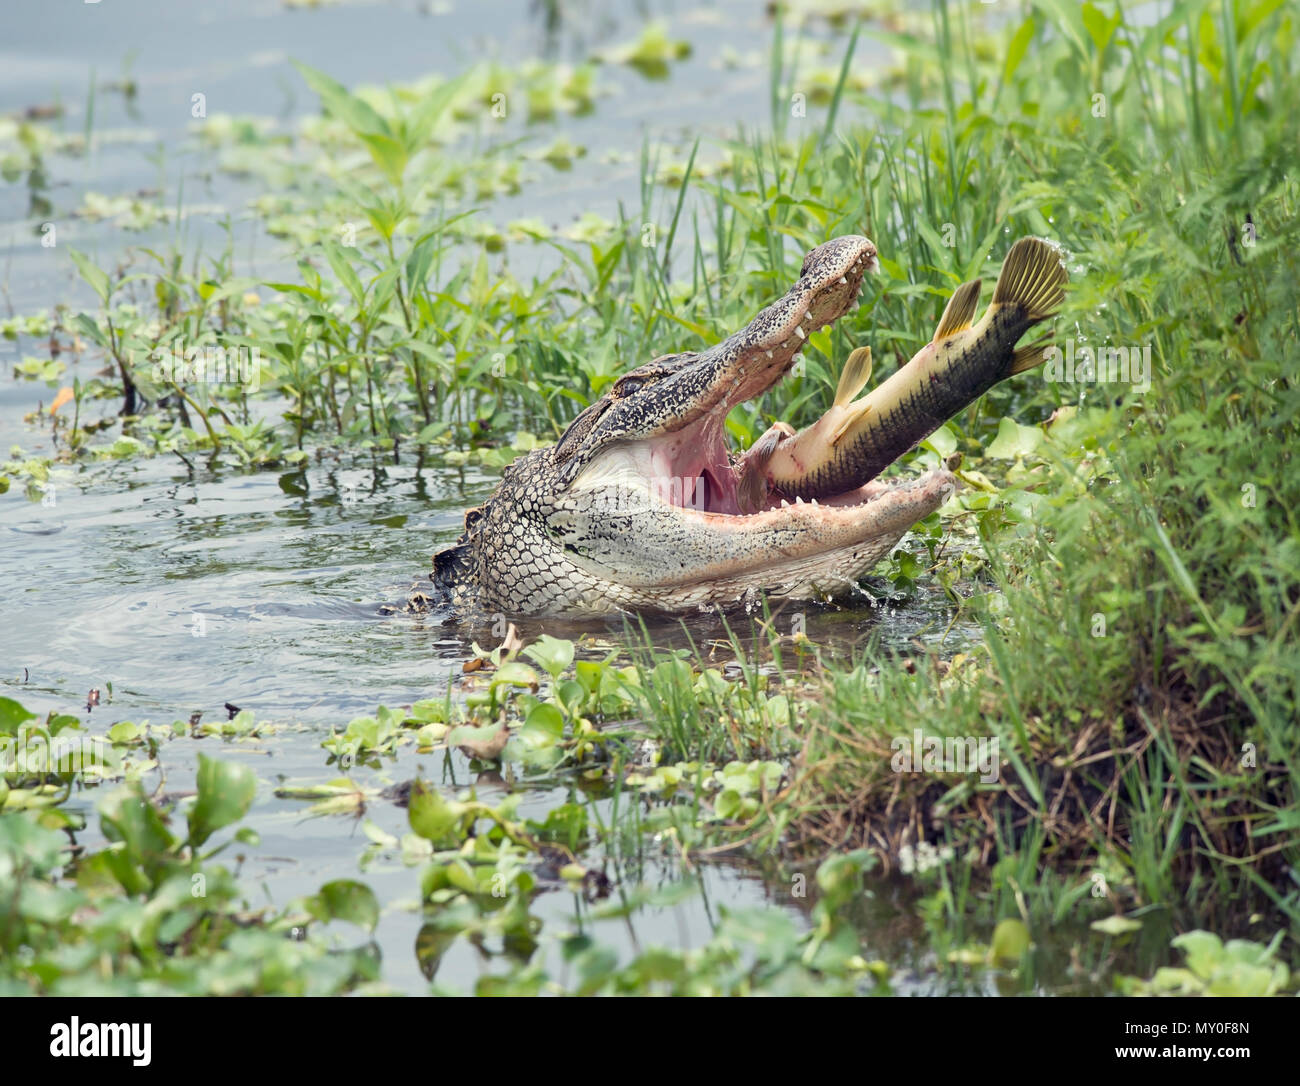 Alligator eating a large fish in Florida lake Stock Photo